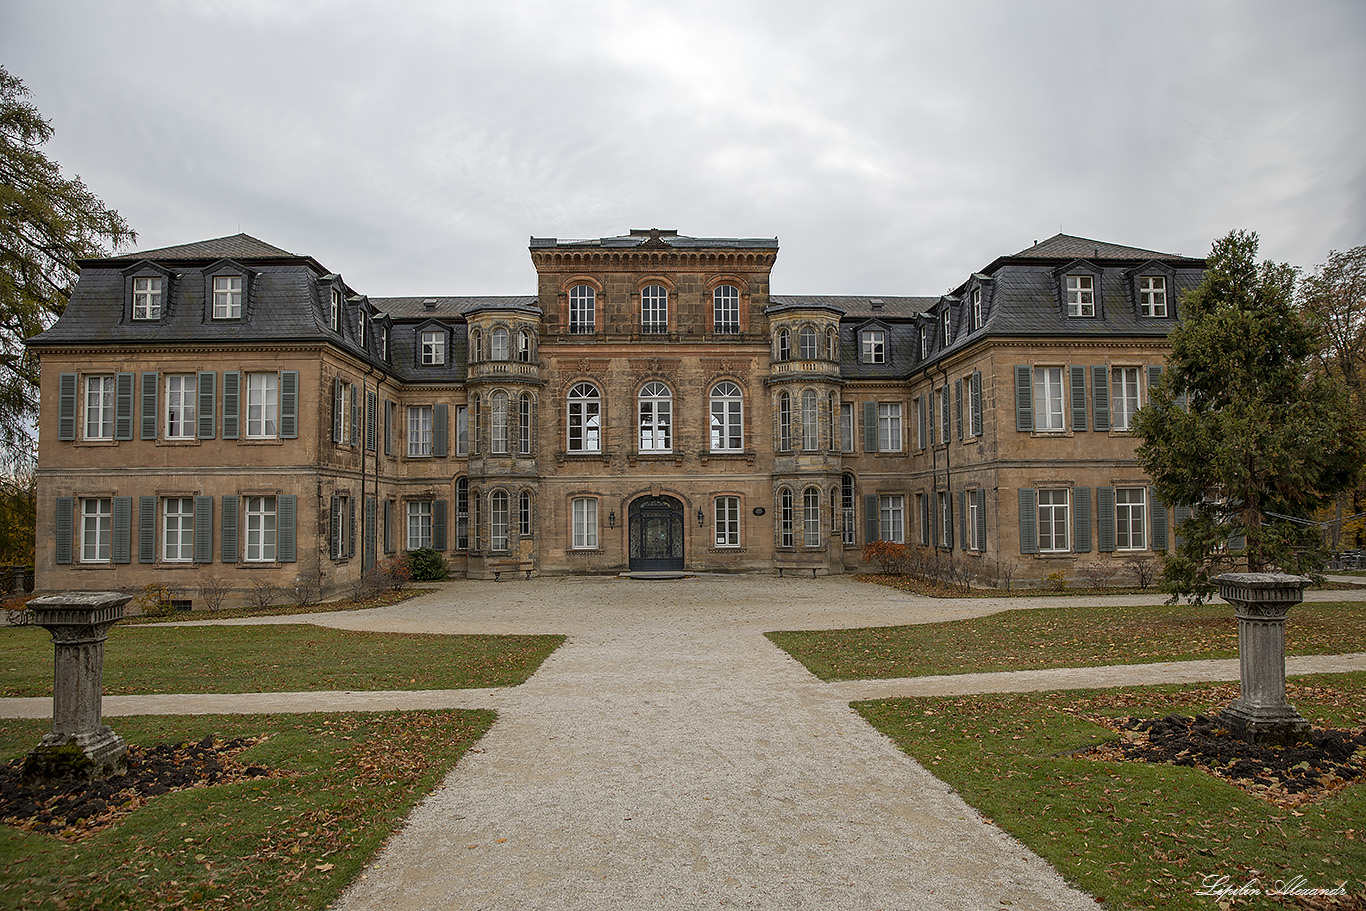 Дворец Фантазия (Schloss Fantaisie) - Эккерсдорф (Eckersdorf) - Германия (Deutschland)